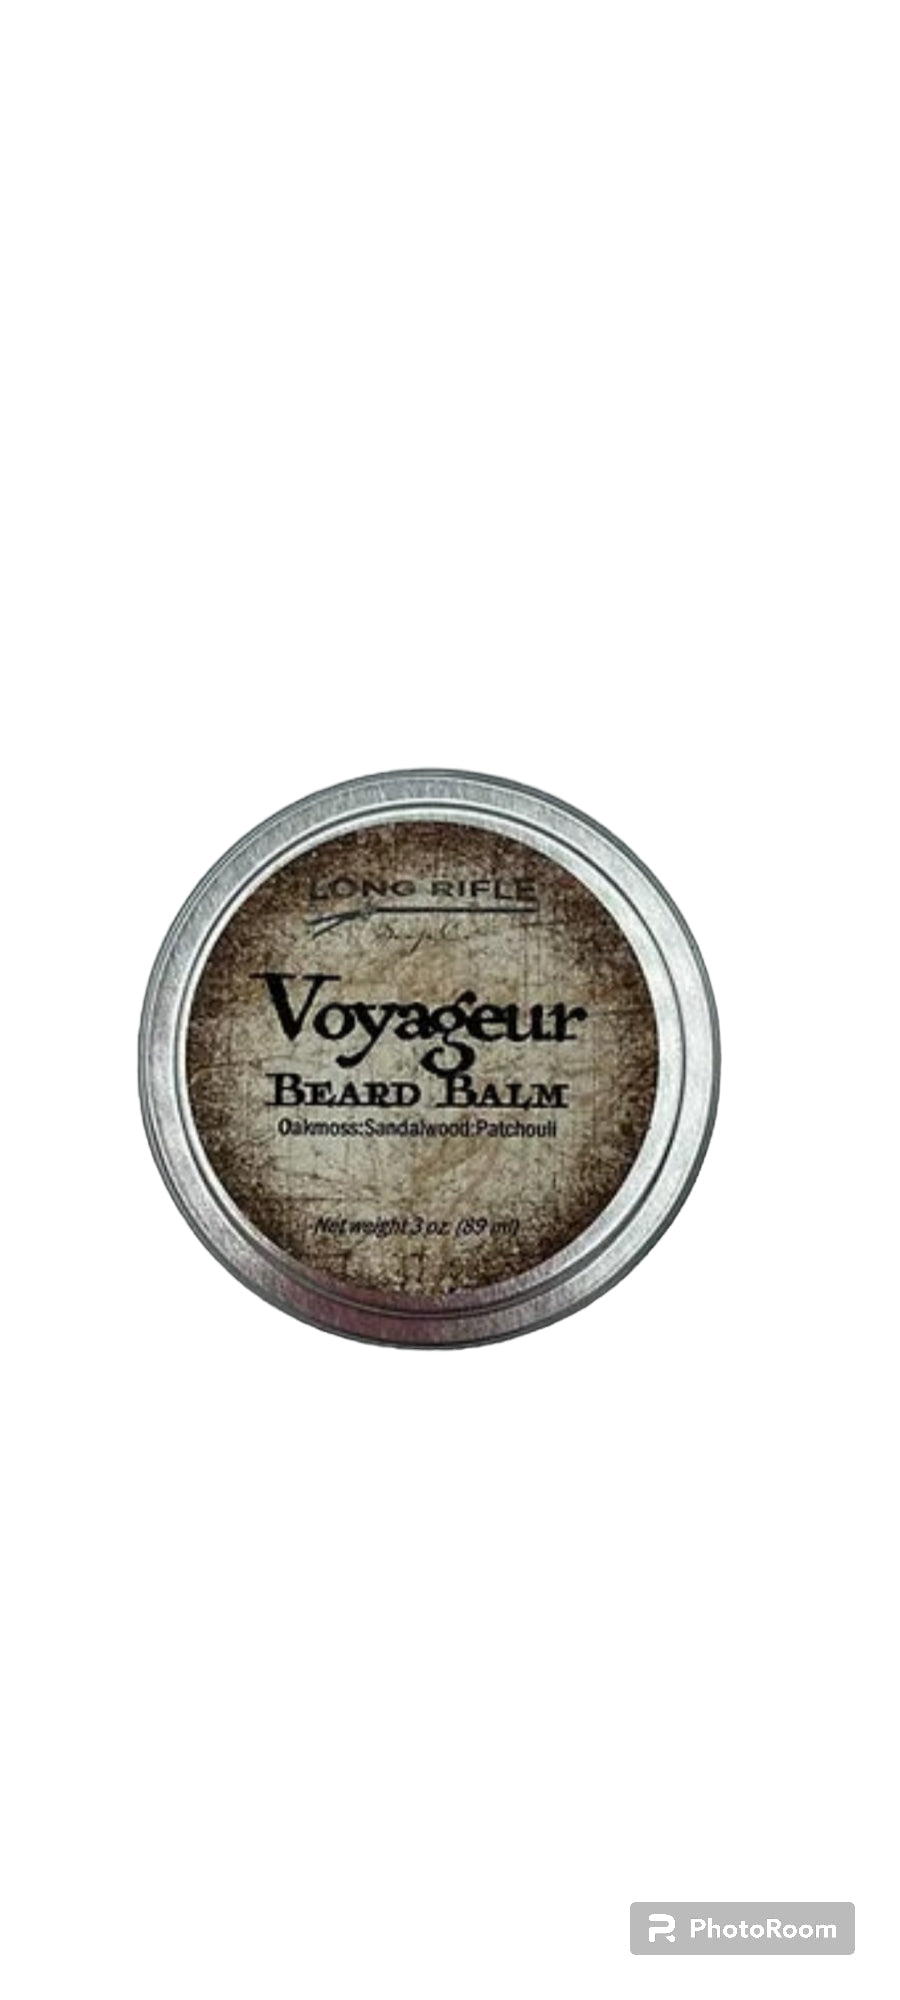 Voyageur Beard Balm